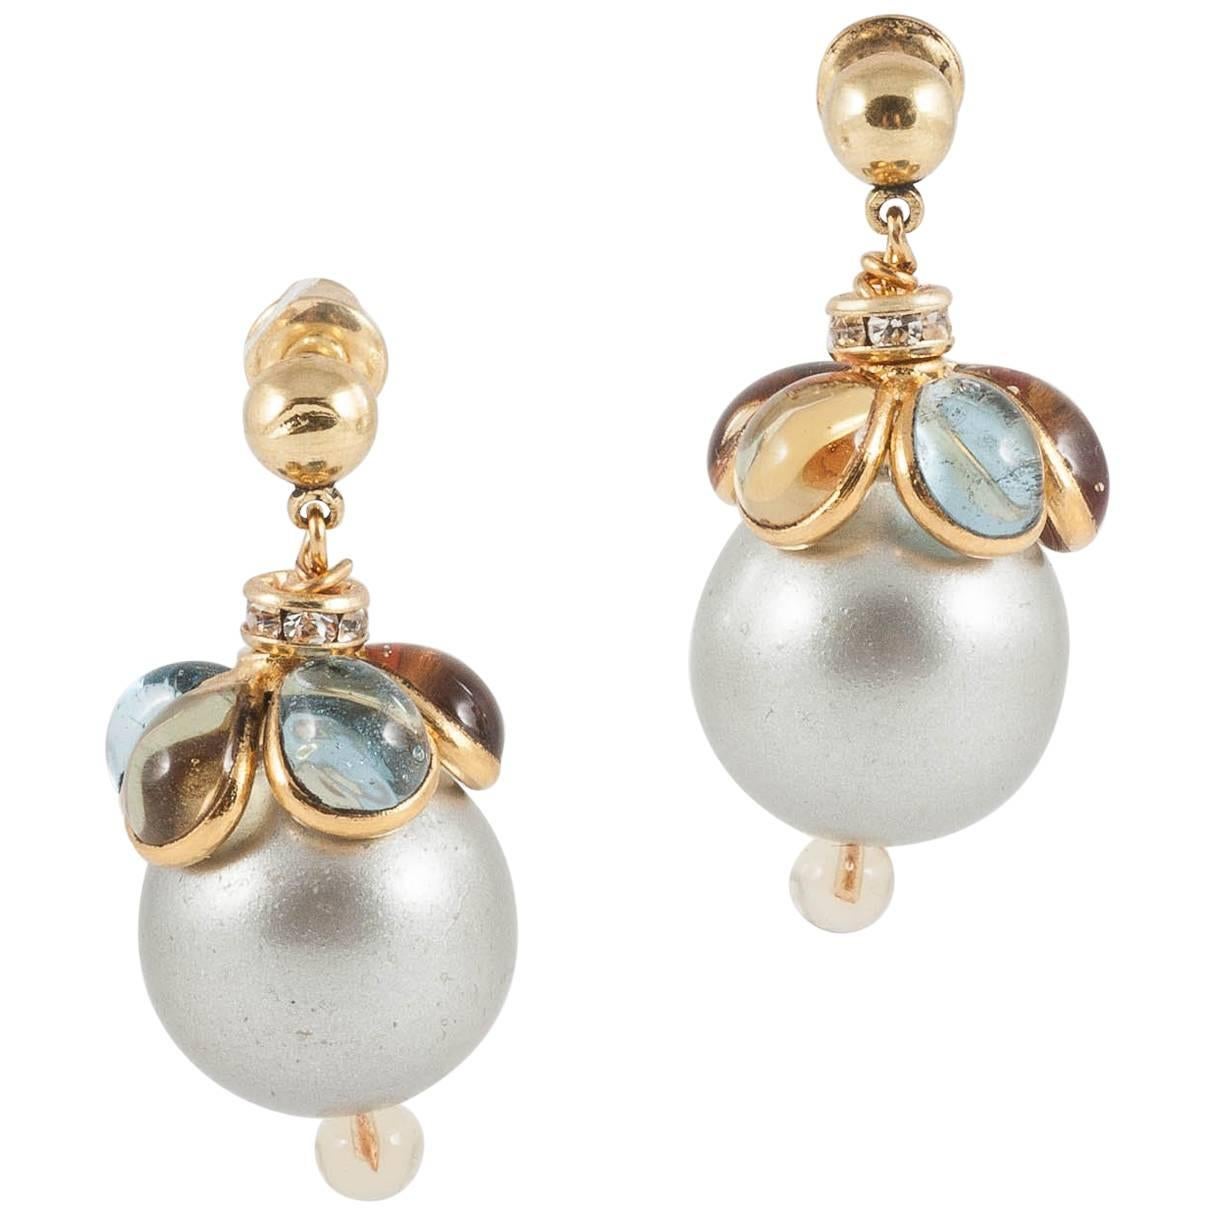 'WW' poured glass/gilt/grey pearl drop earrings, 2016